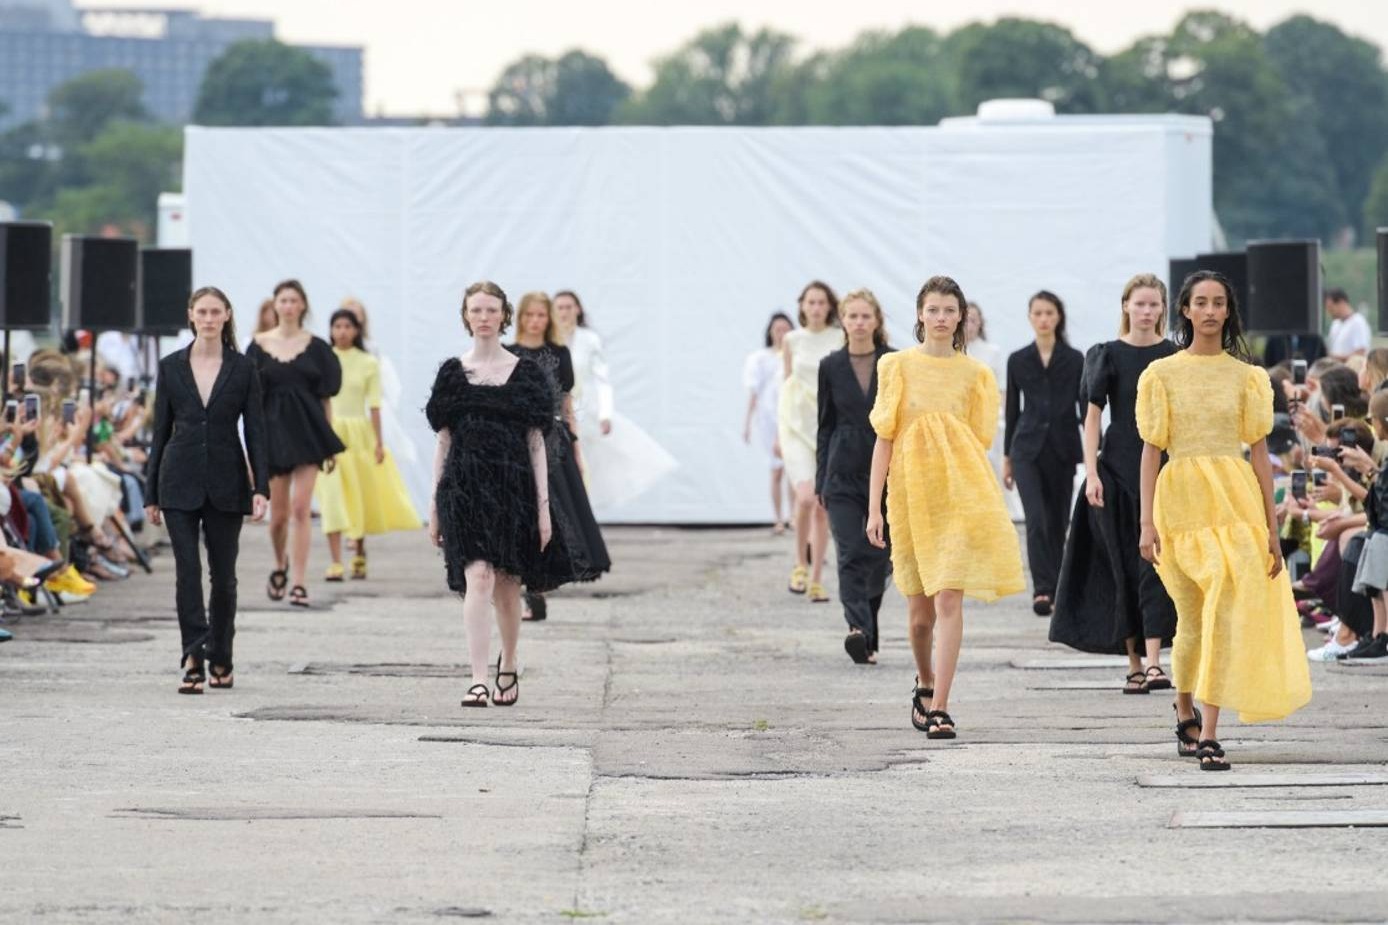 Copenhagen Fashion Week releases annual sustainability report  2021